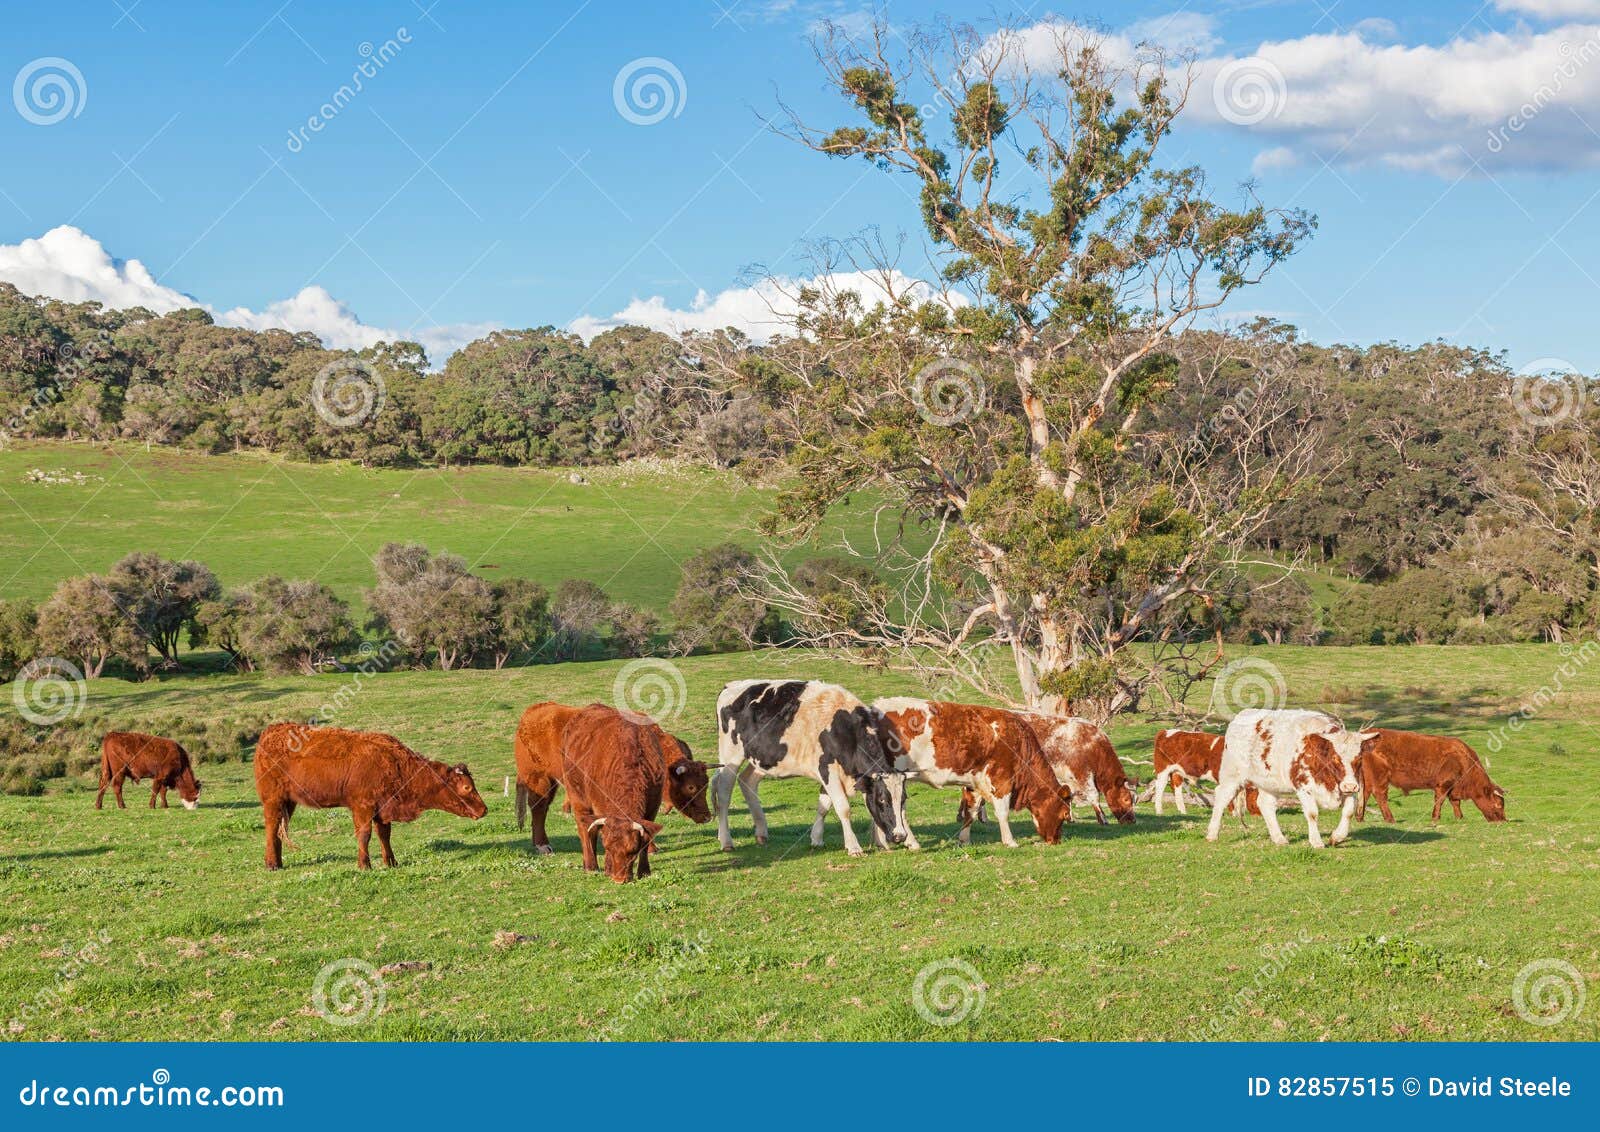 Australian Farm stock image. Image of - 82857515